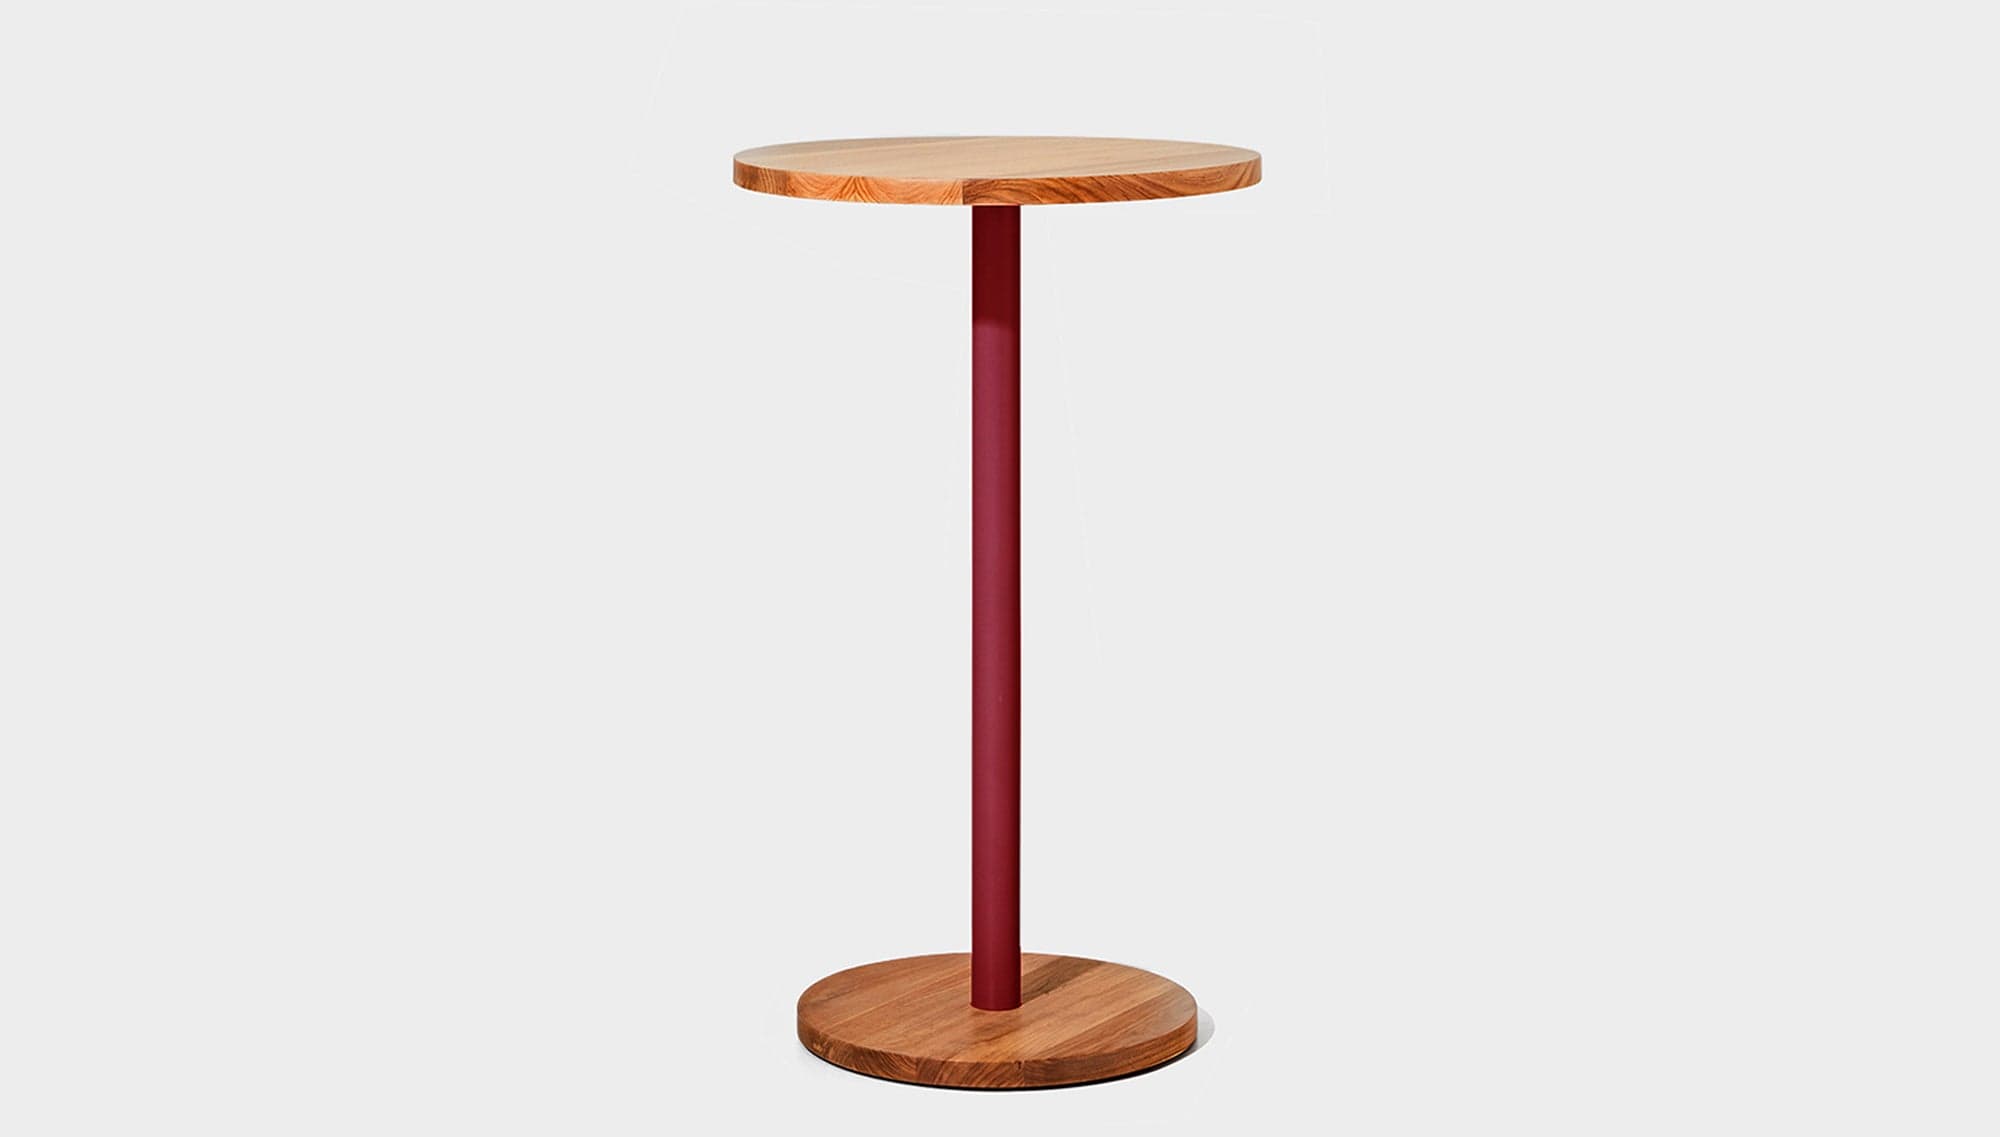 reddie-raw cafe & bar pedestal table 60dia x 100H *cm / Solid Reclaimed Wood Teak~Natural / Metal~Red Bob Pedestal Cafe & Bar Table (2 heights)